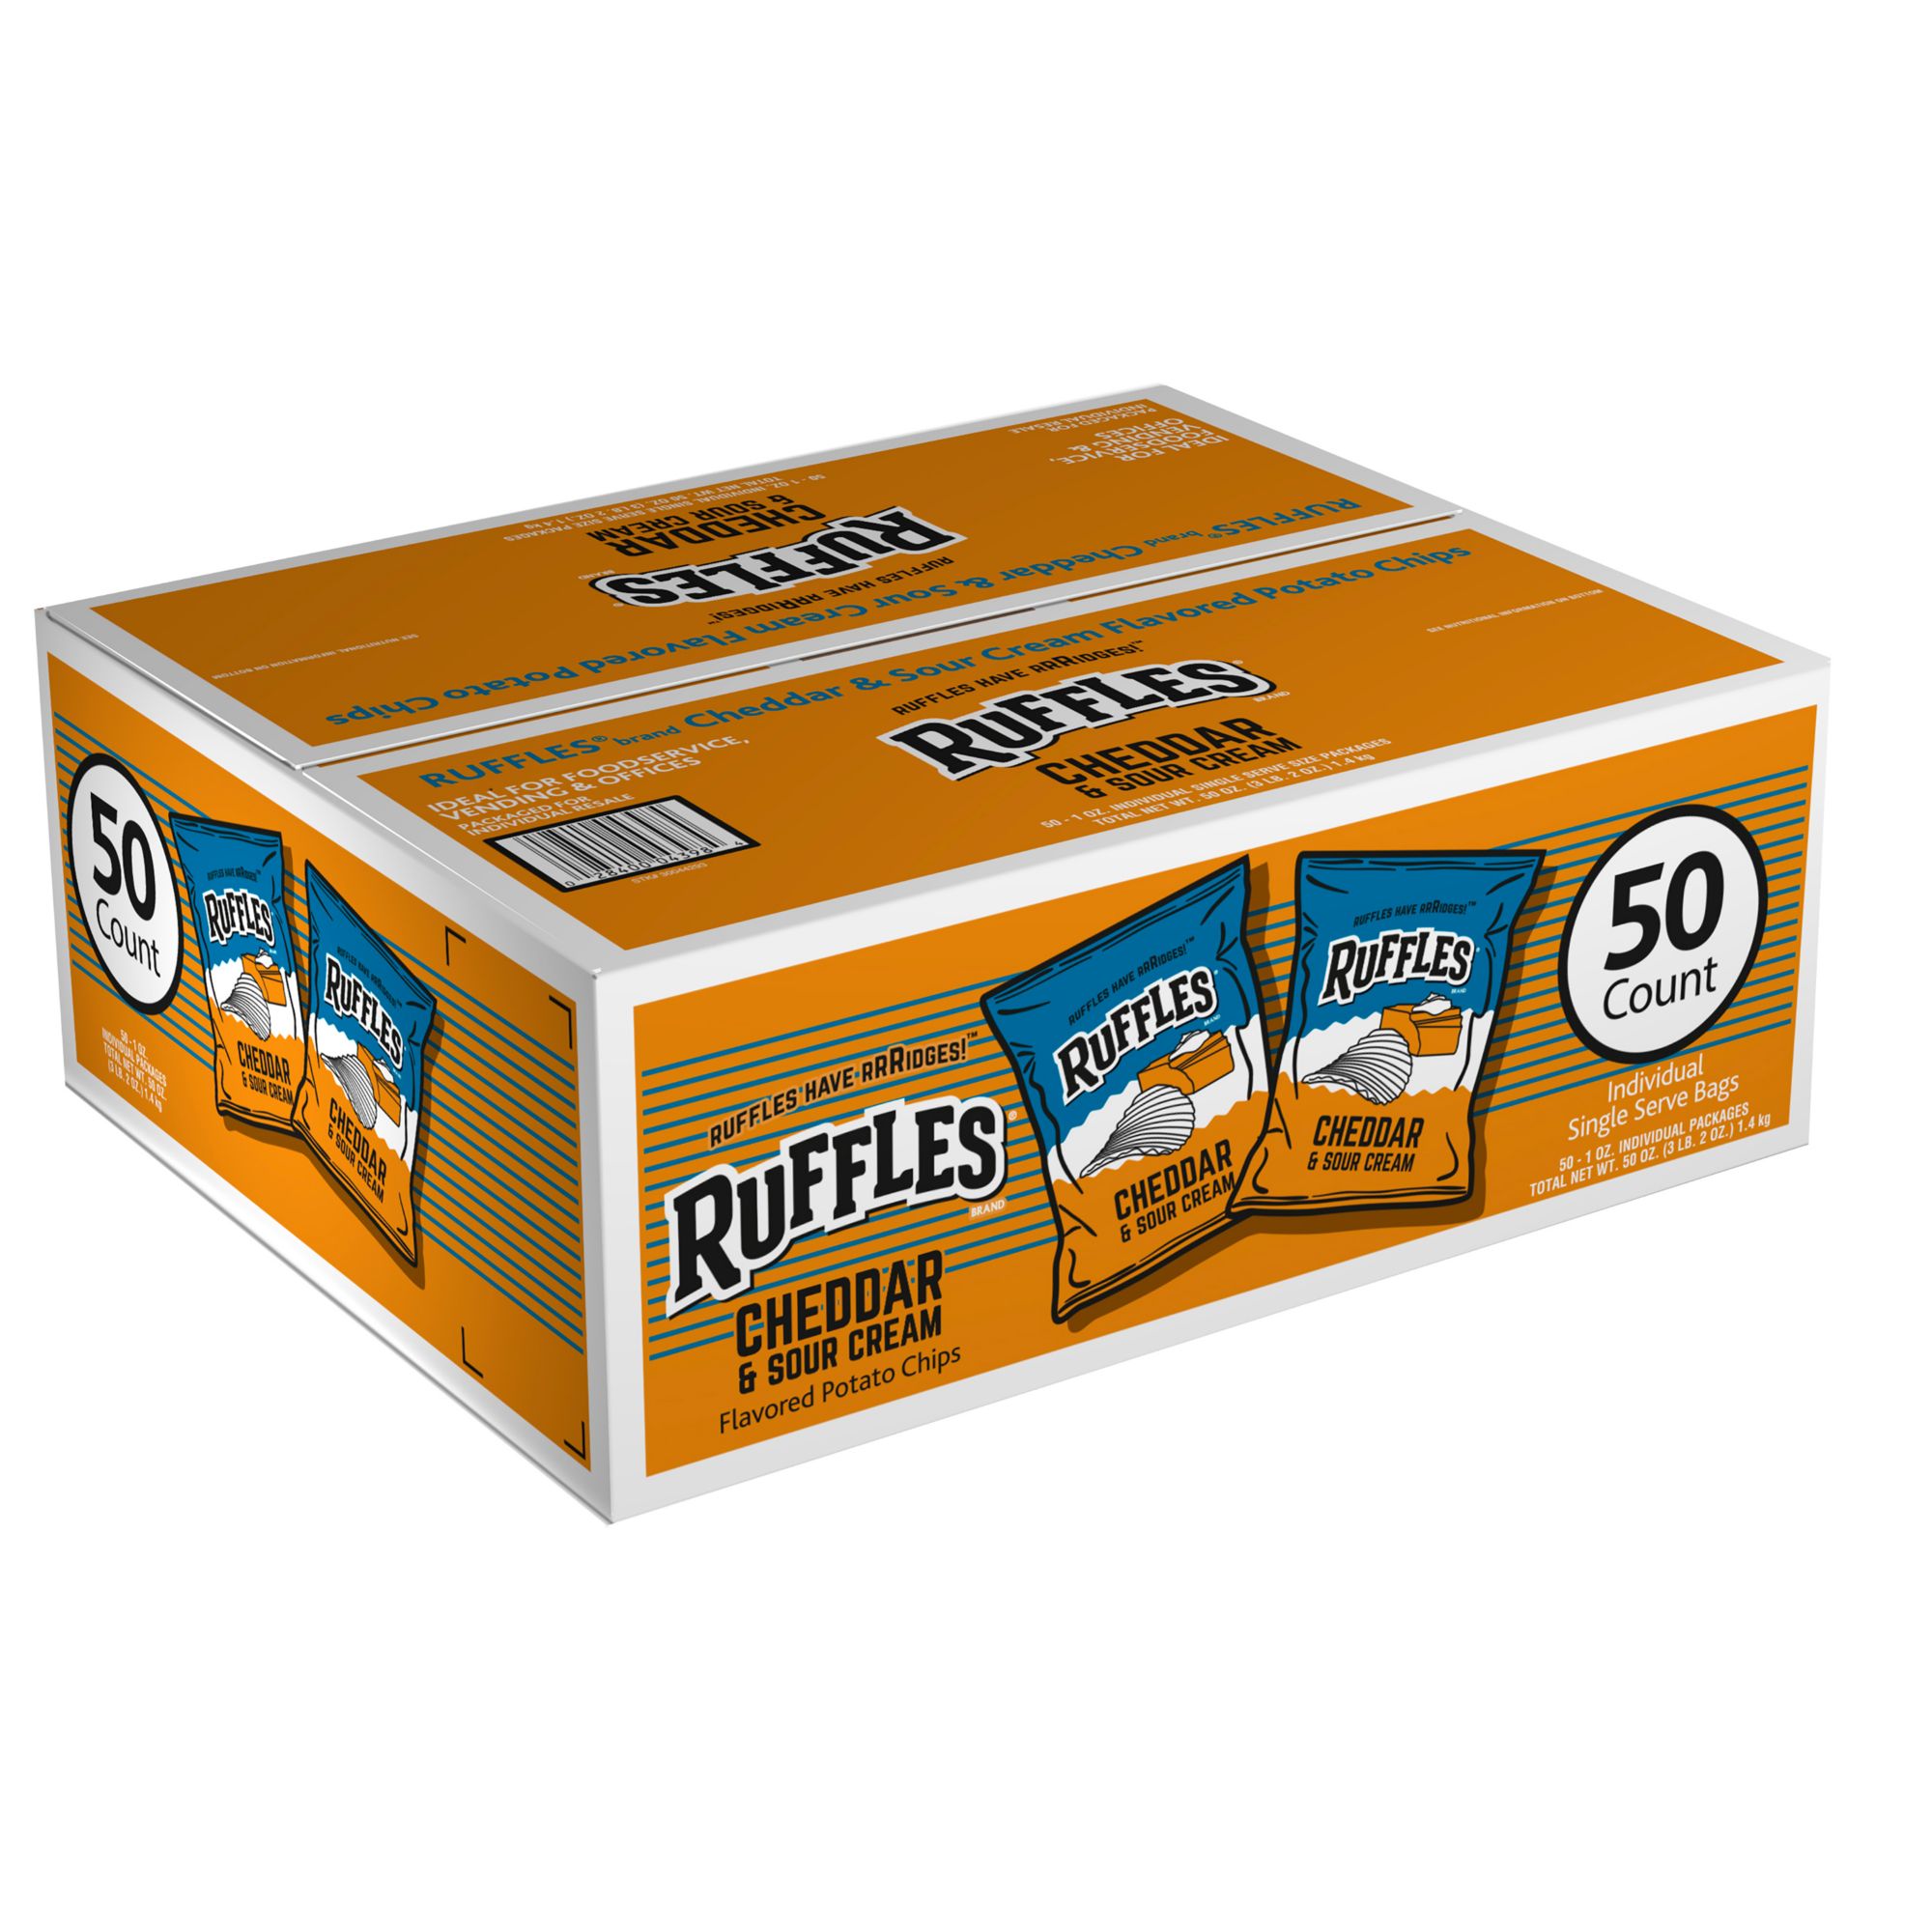 Ruffles Cheddar & Sour Cream Chips